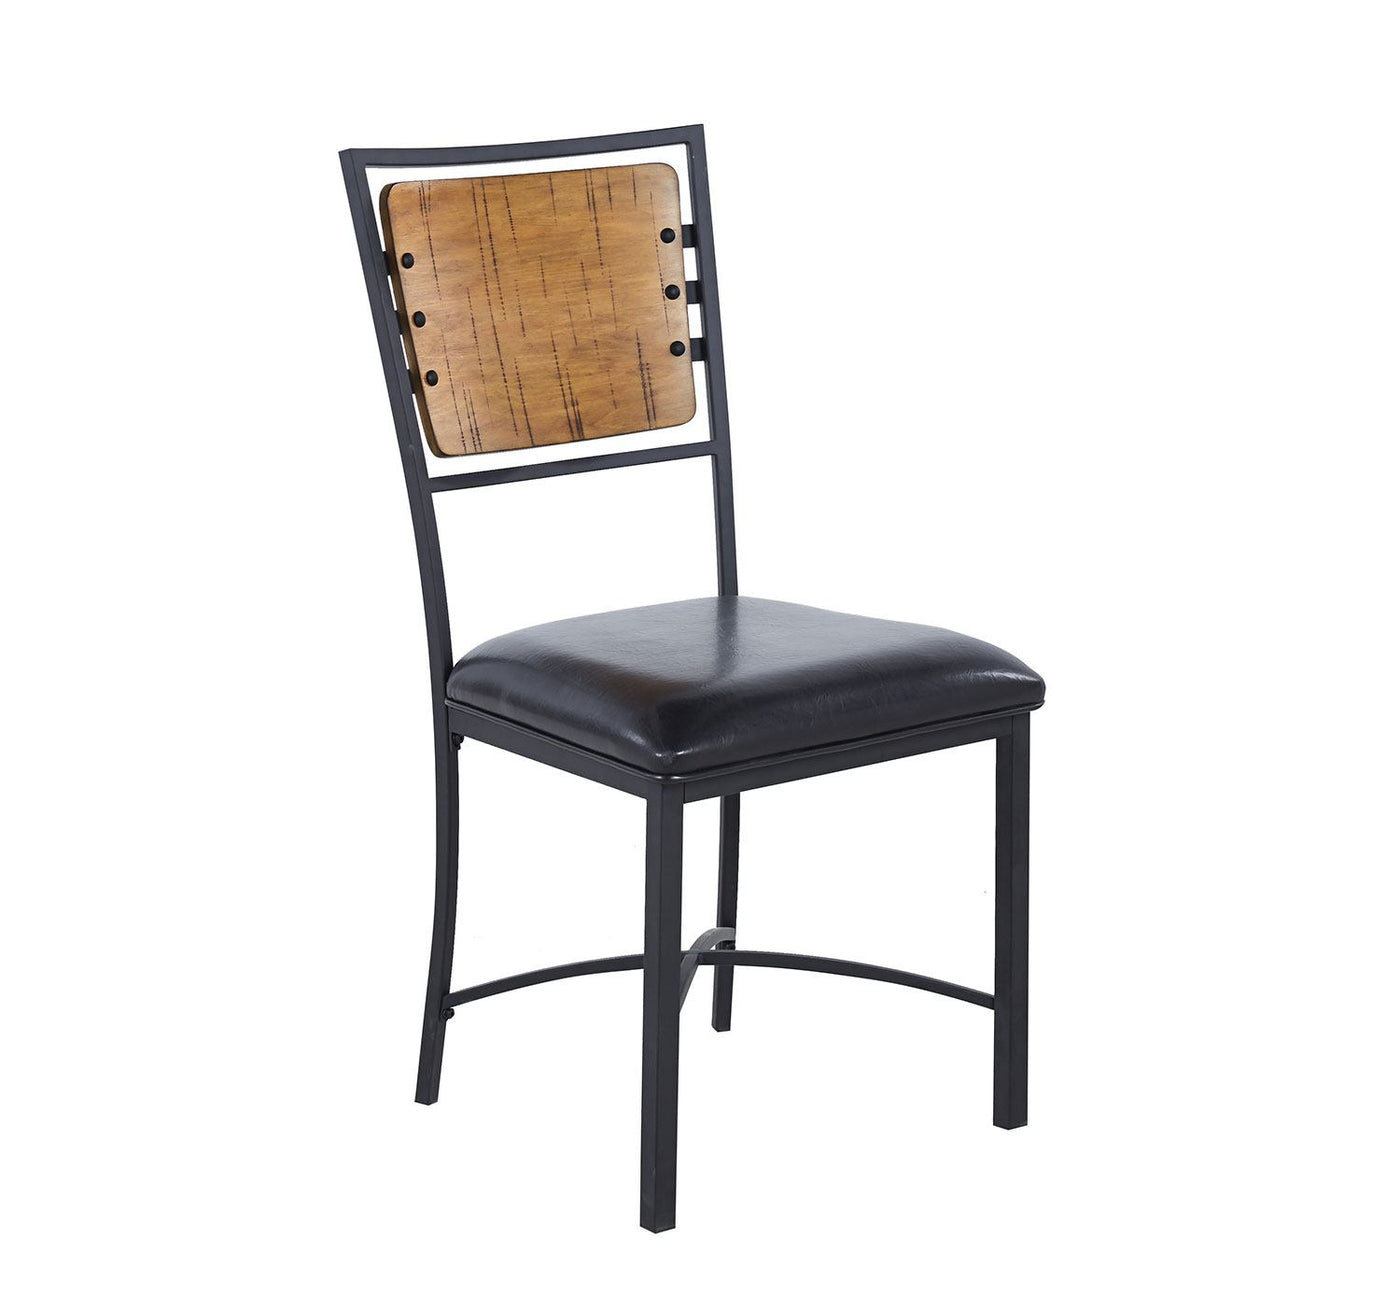 Shala Dining Chair - Natural Wood, Black